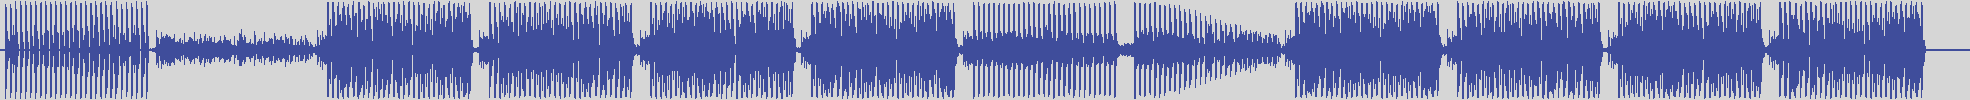 nf_boyz_records [NFY009] Cris Roberts - Honey Blue [One Night Mix] audio wave form